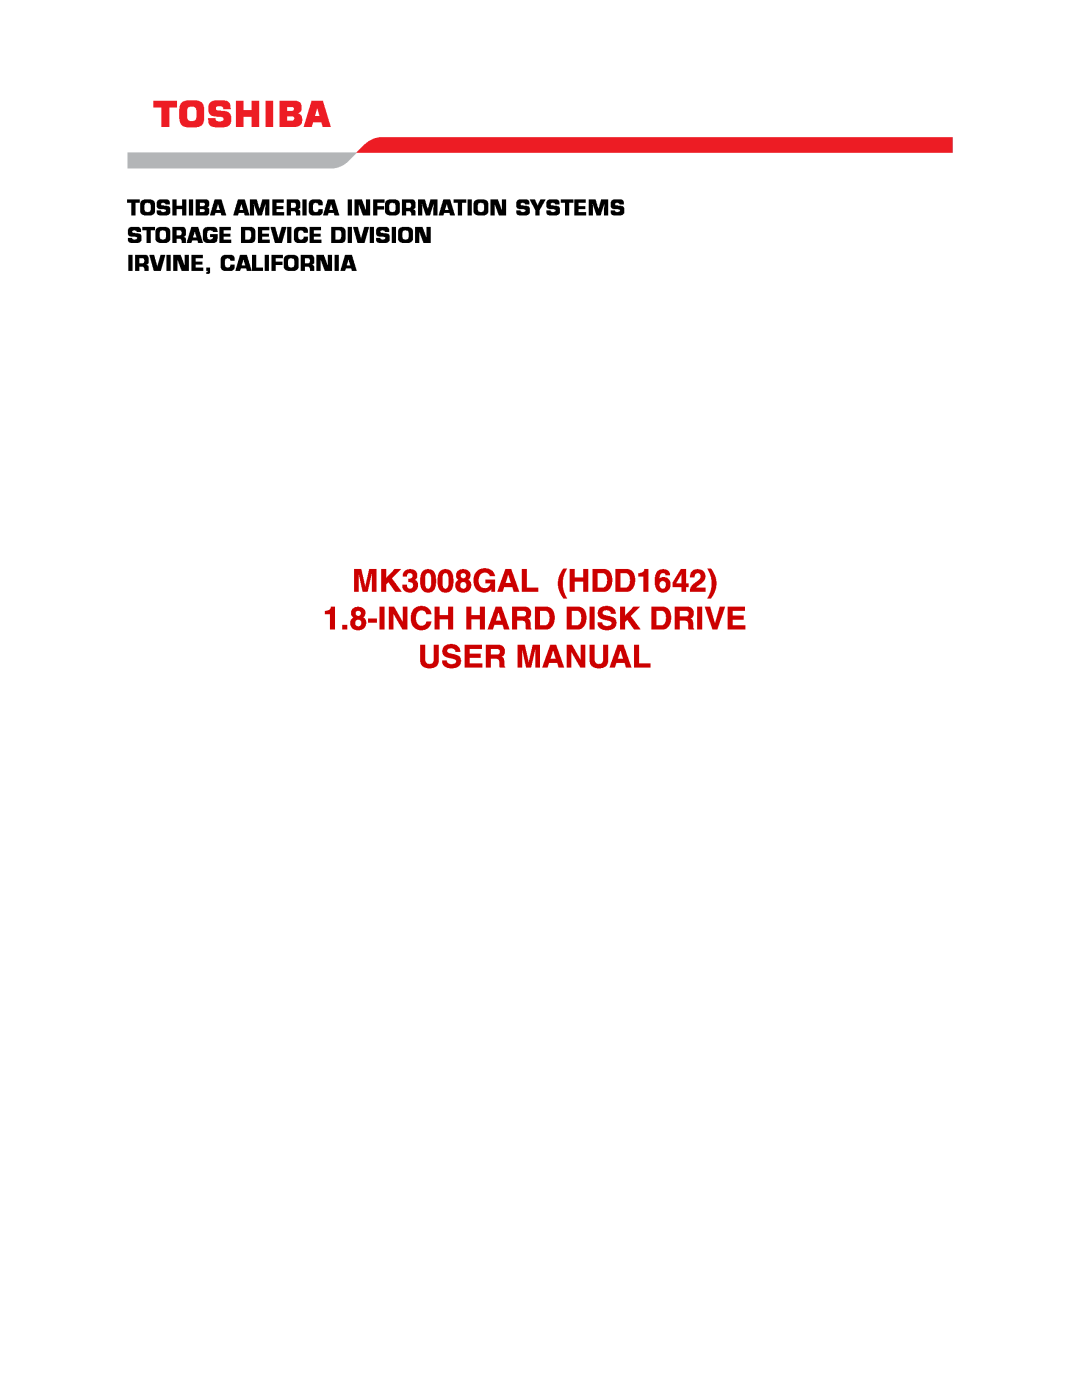 Toshiba MK3008GAL (HDD1642) user manual Toshiba America Information Systems Storage Device Division, Irvine, California 